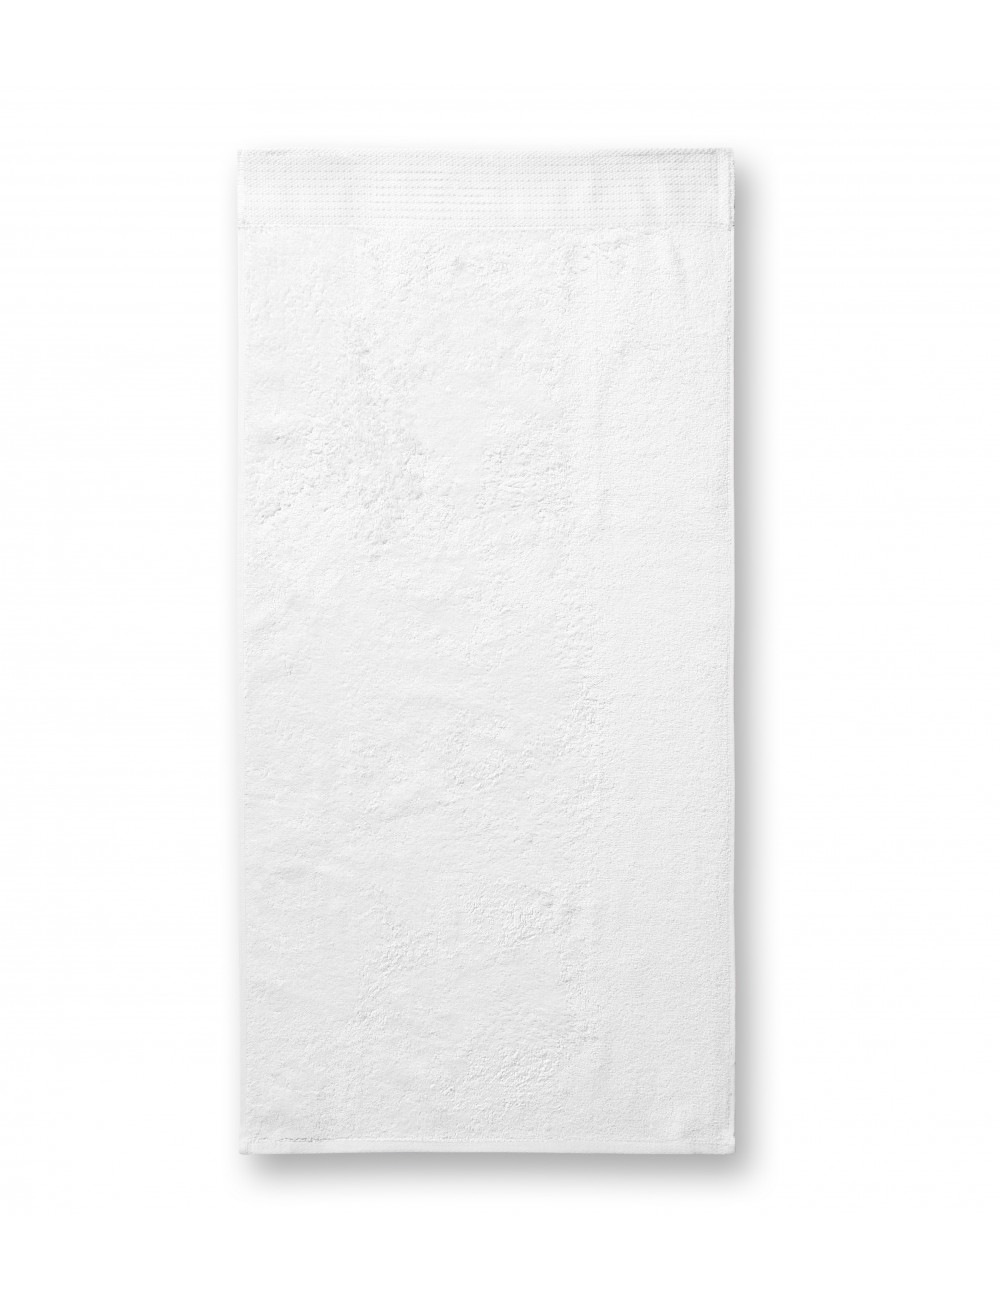 Unisex towel bamboo towel 951 white Adler Malfinipremium